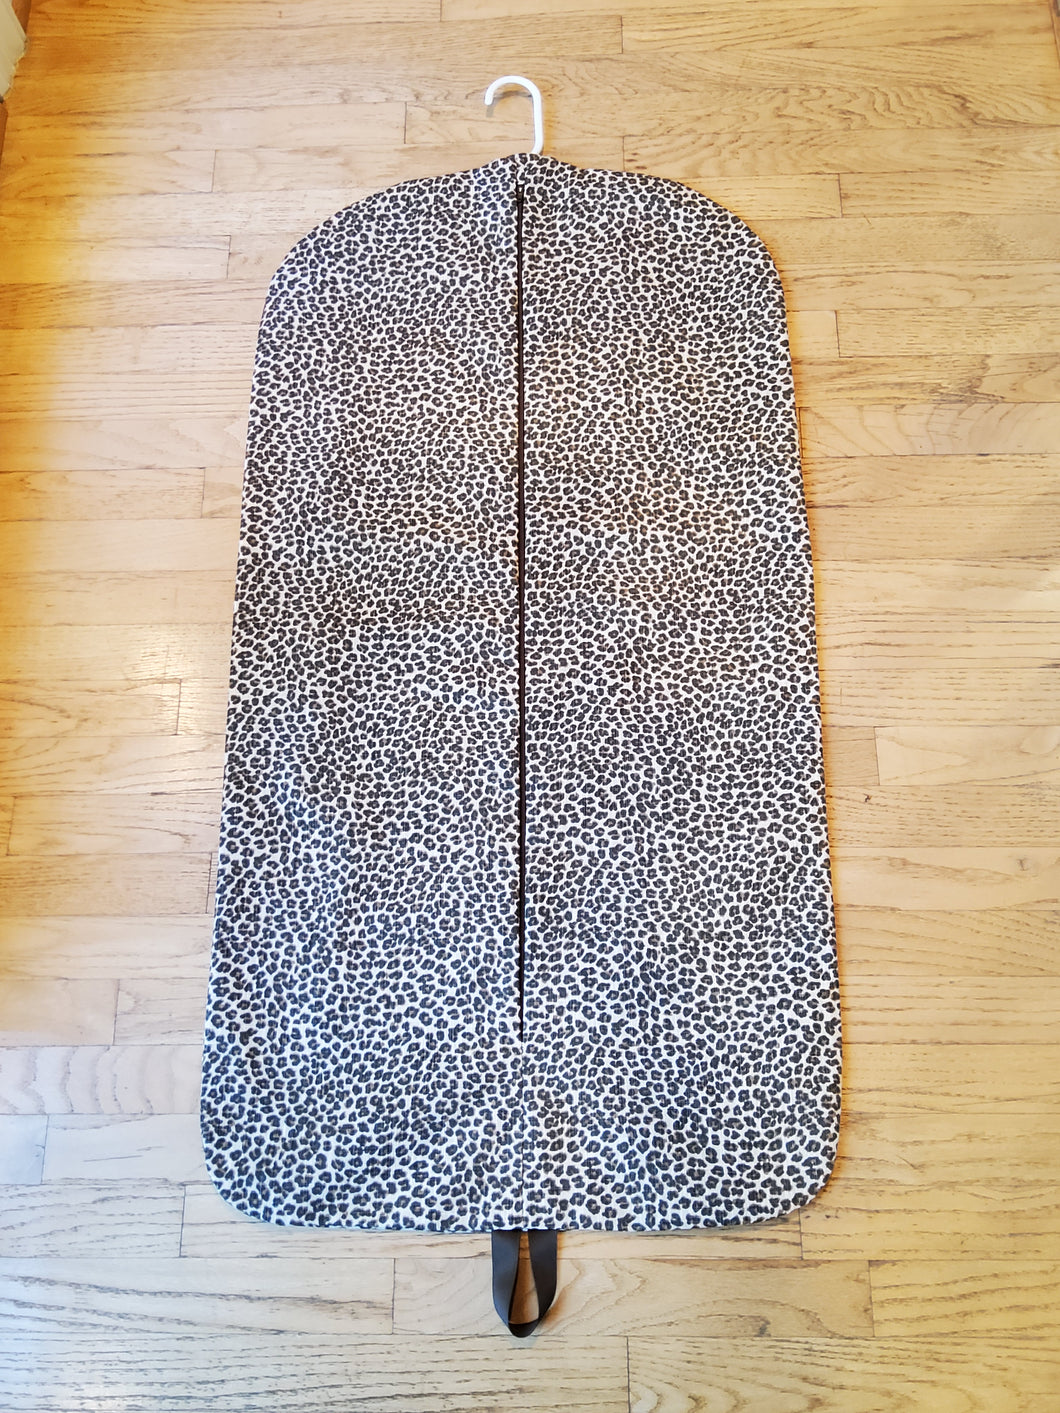 Leopard Print Garment Bag for Ladies